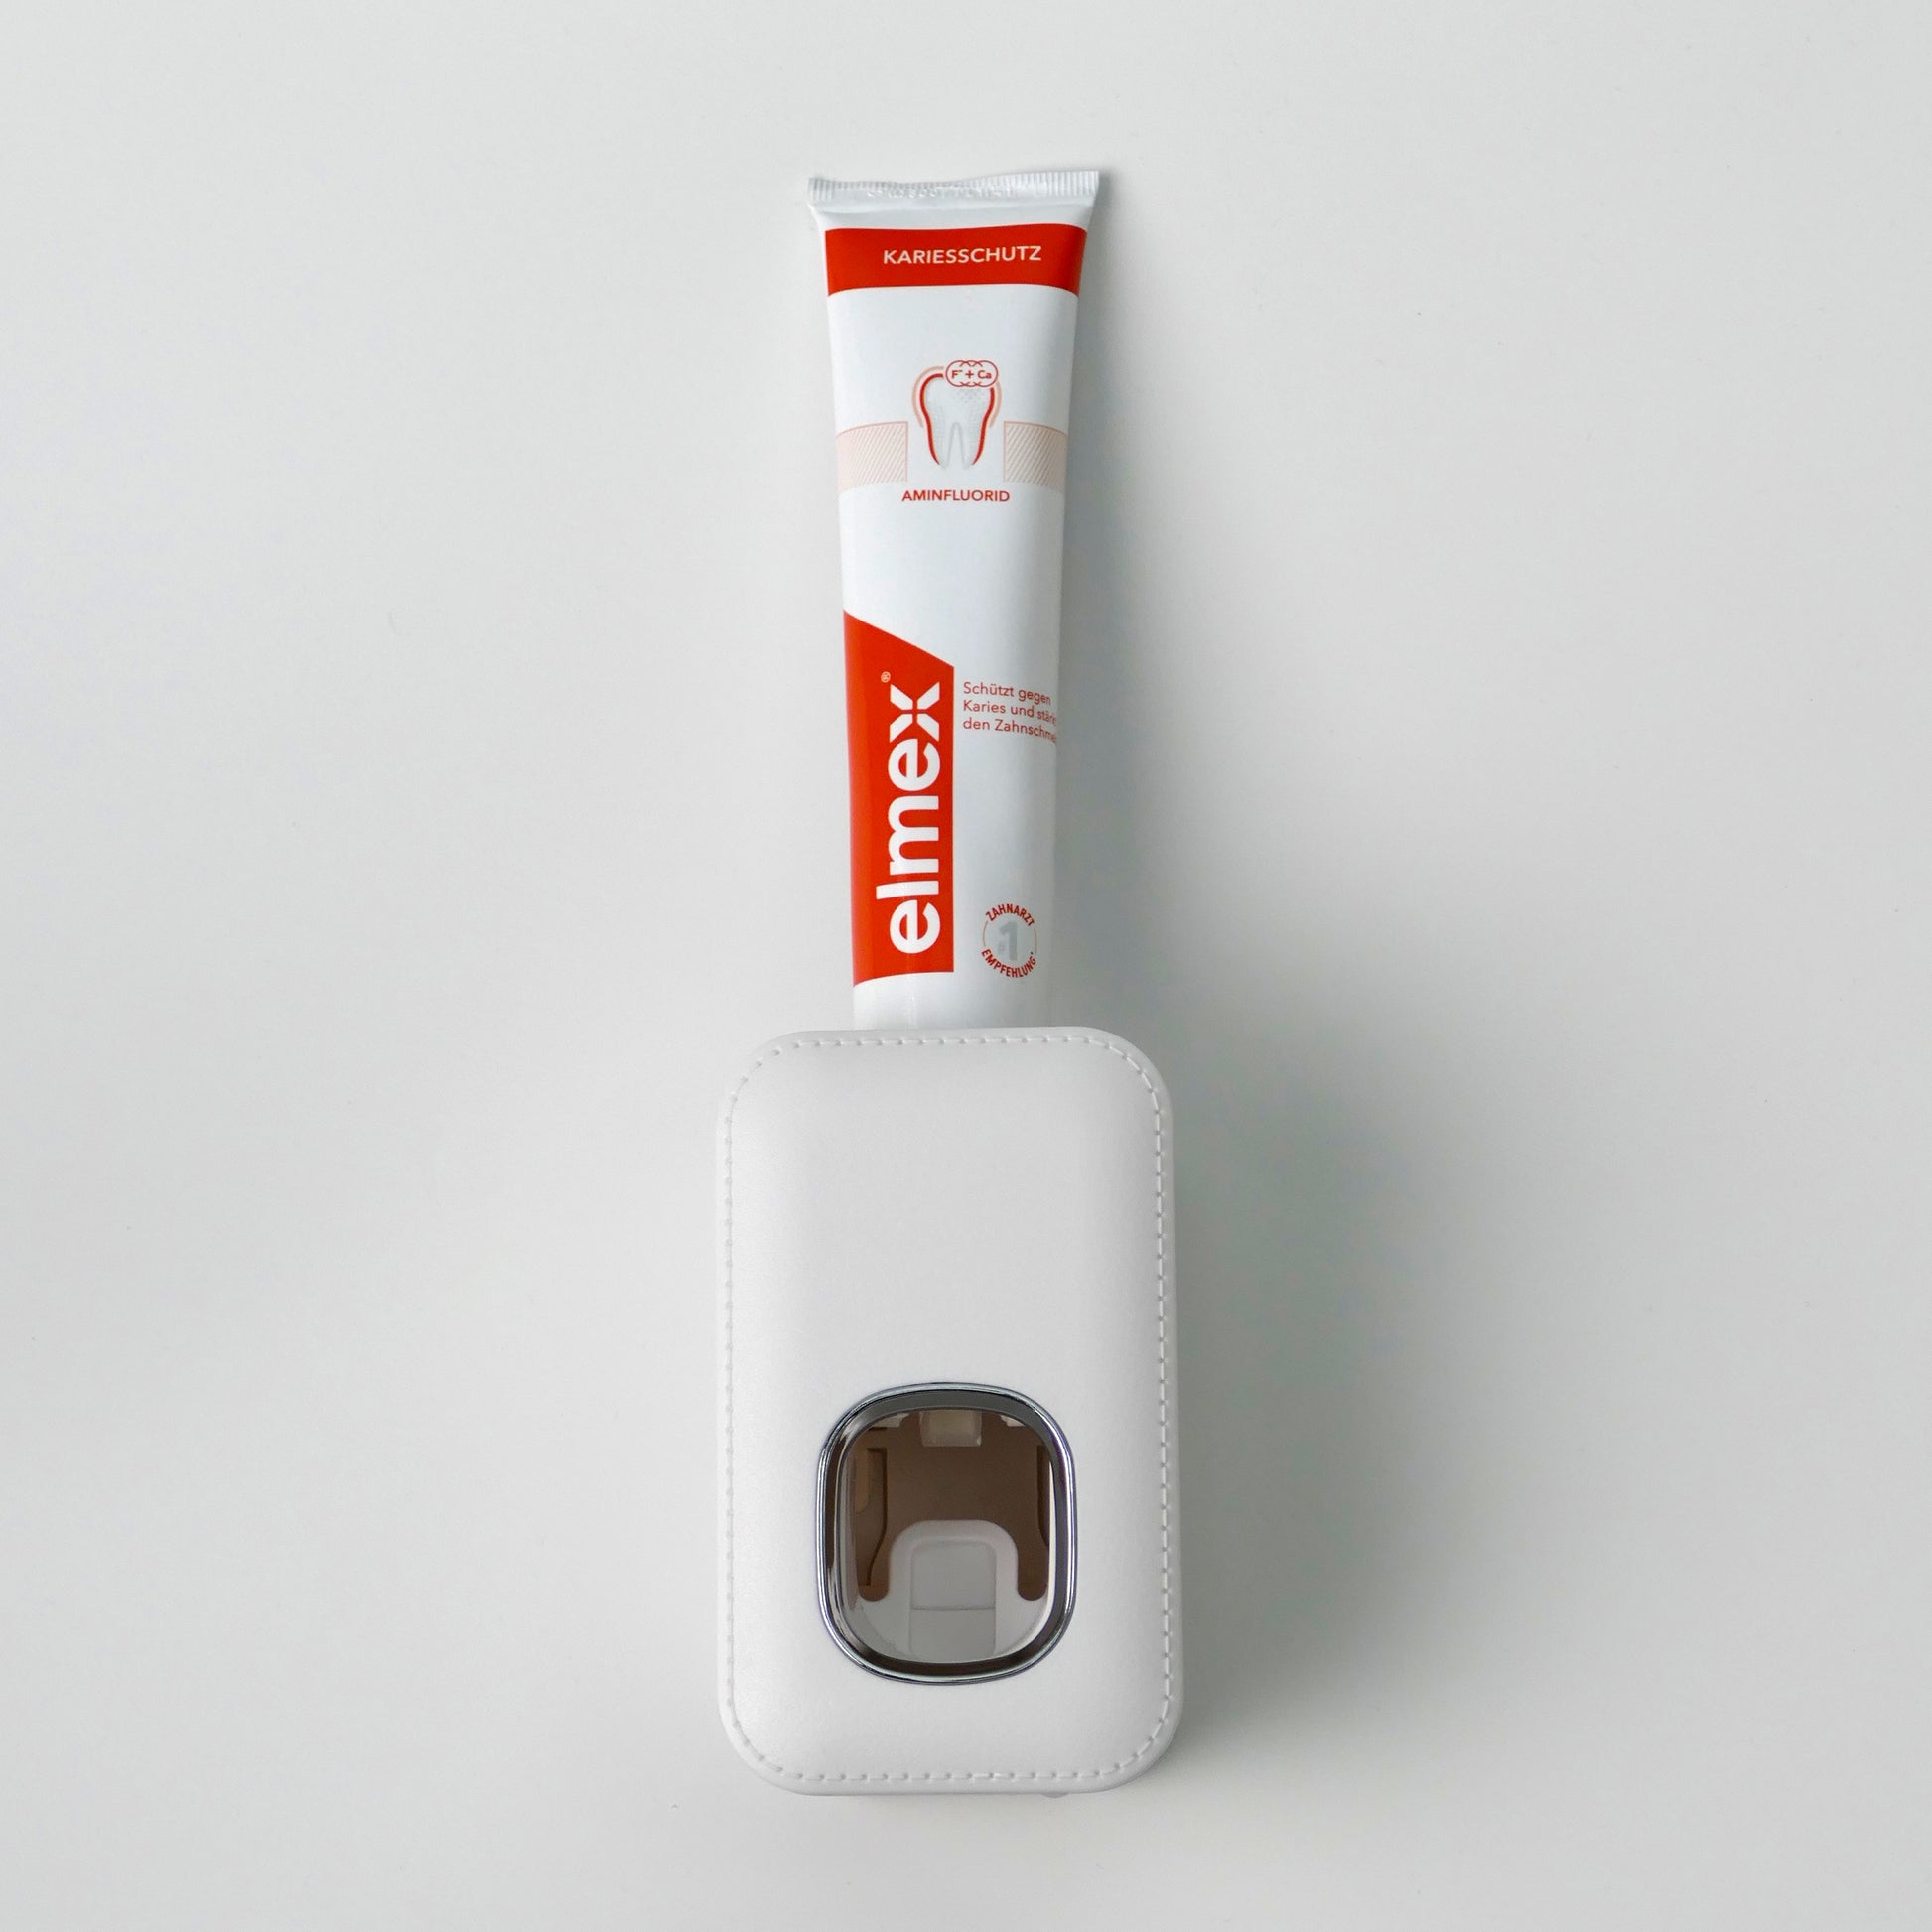 Toothpaste dispenser adapter for Elmex/Aronal – my-laptop-setup